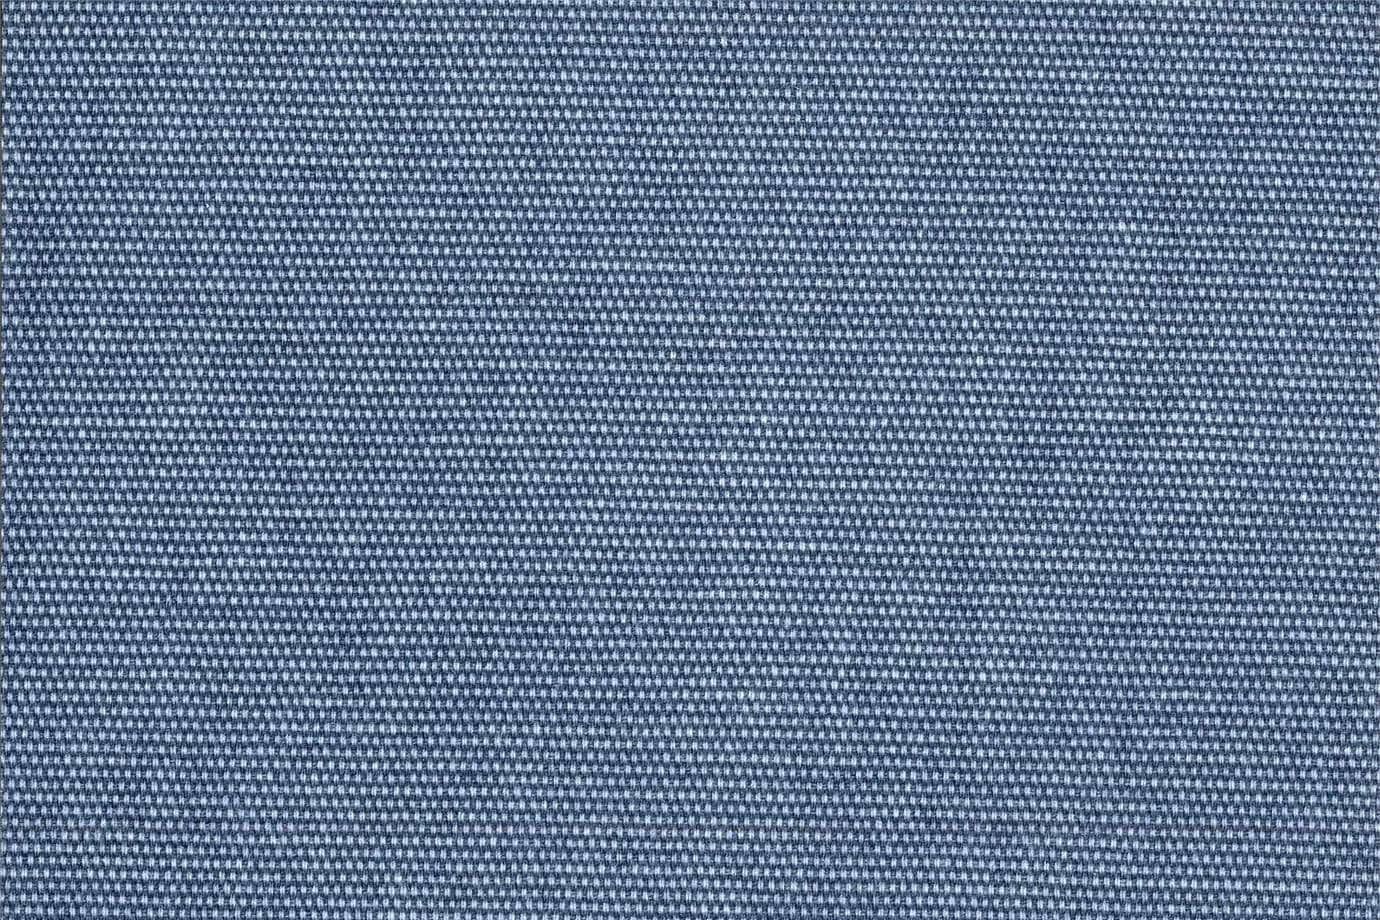 AR0866 UCCIARDONE 018 Azzurro home decoration fabric